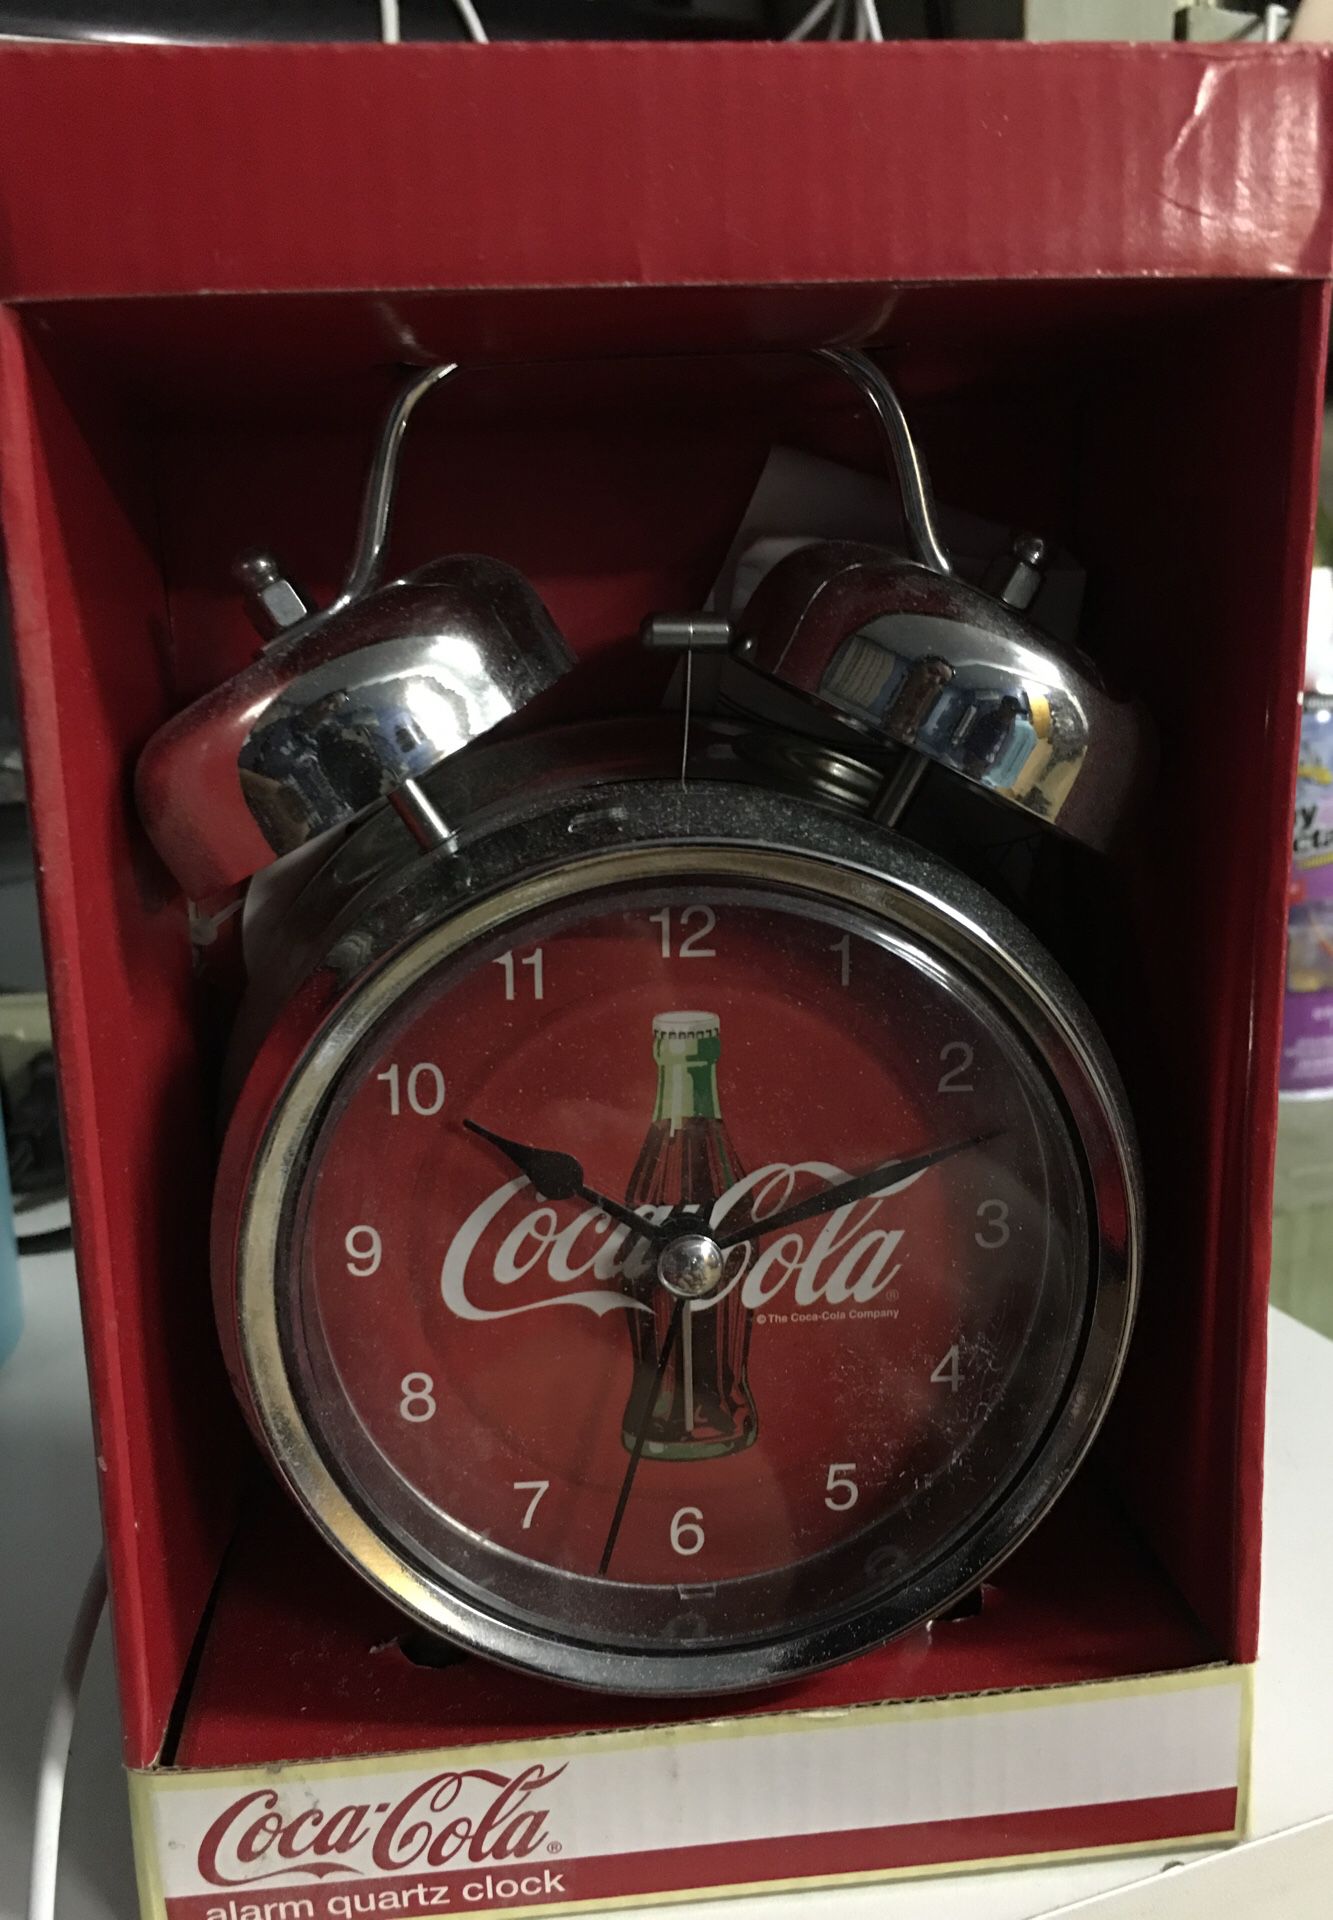 Old fashion Coca-Cola alarm clock